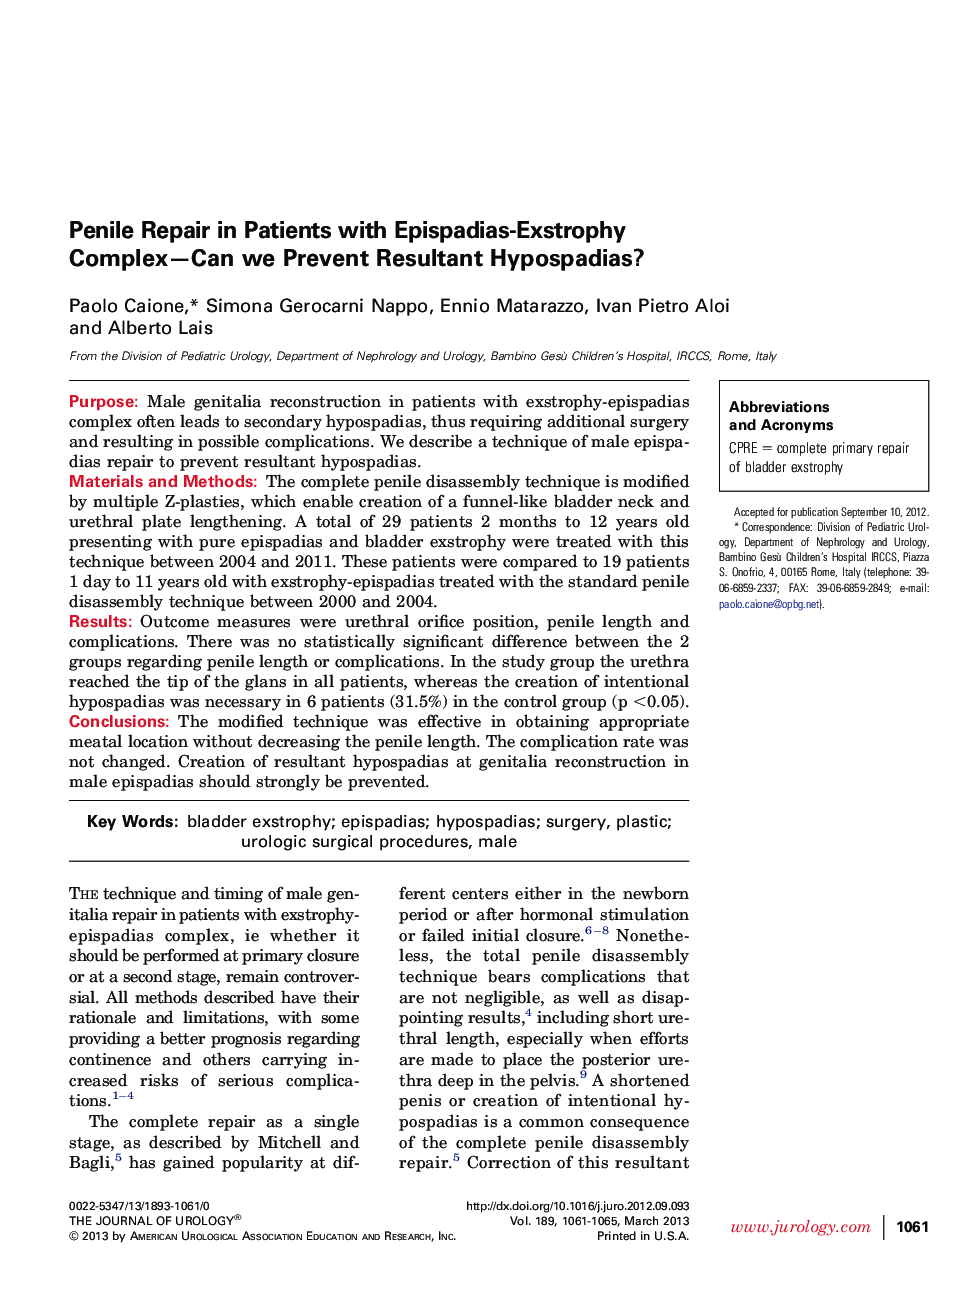 Penile Repair in Patients with Epispadias-Exstrophy Complex-Can we Prevent Resultant Hypospadias?